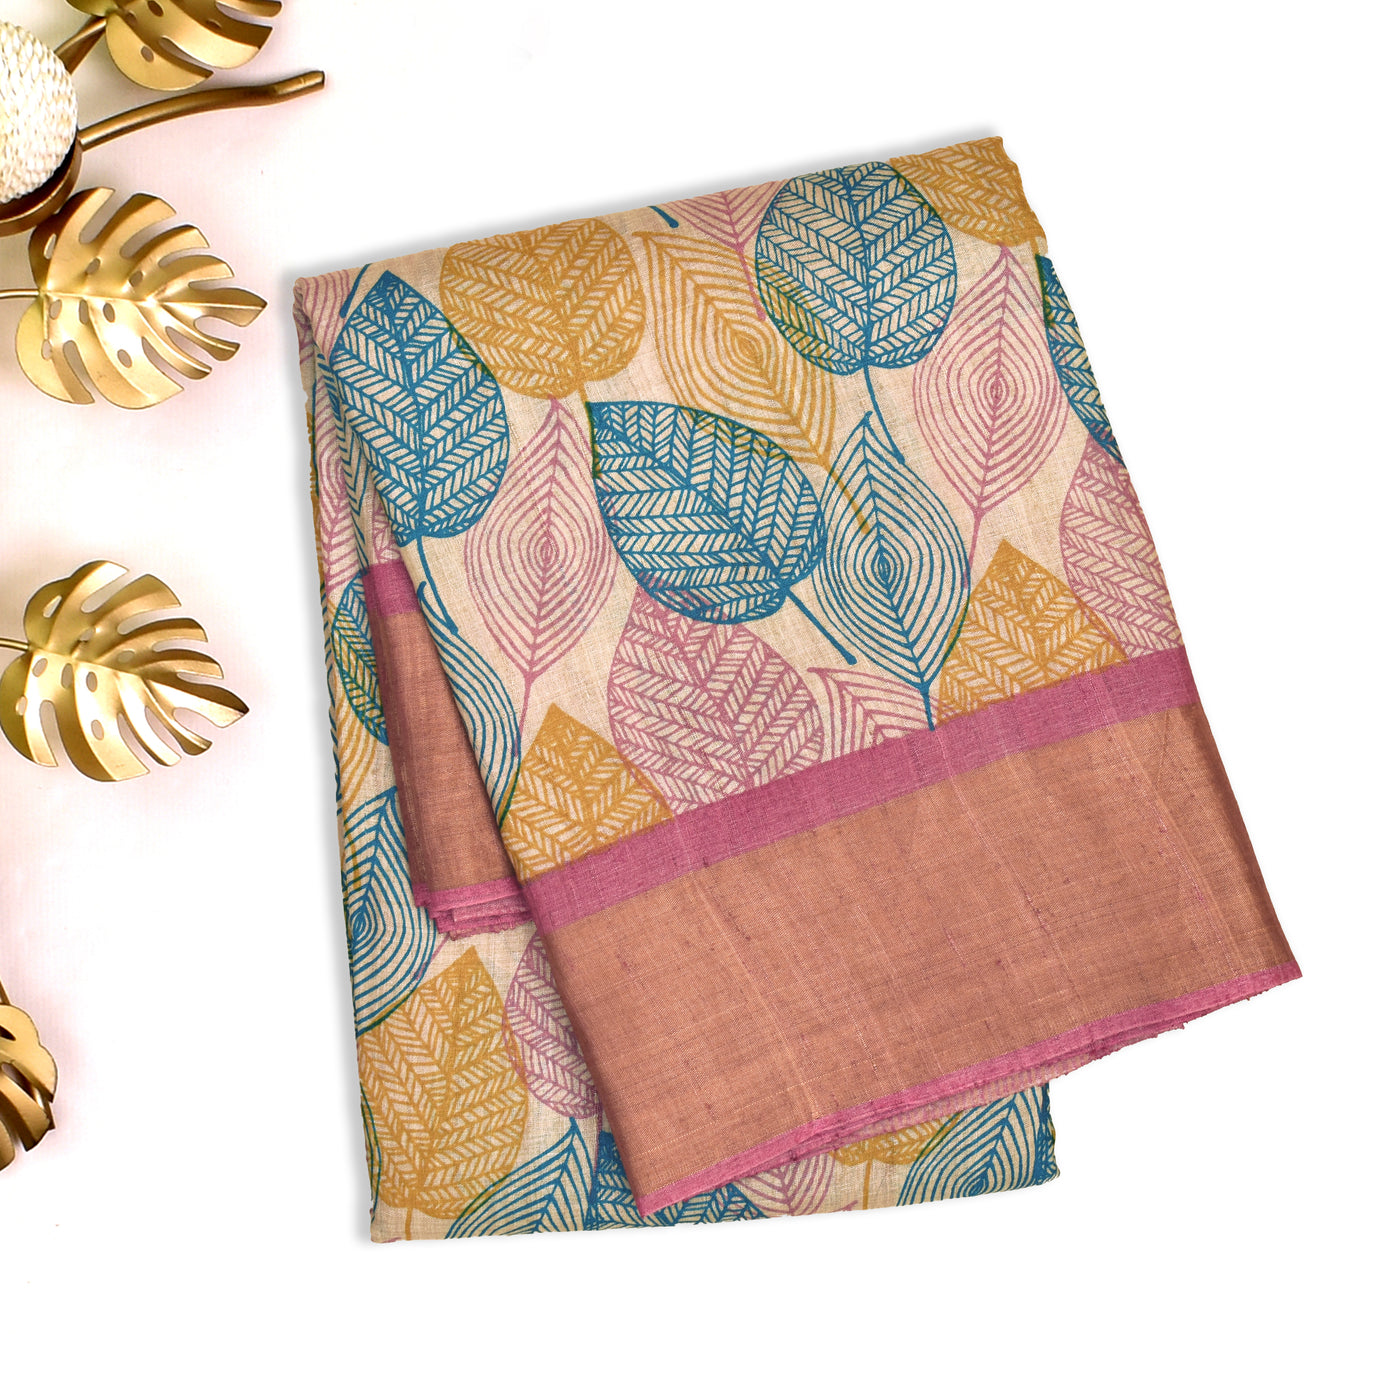 Off White Tussar Silk Saree with Leaf Printed Design